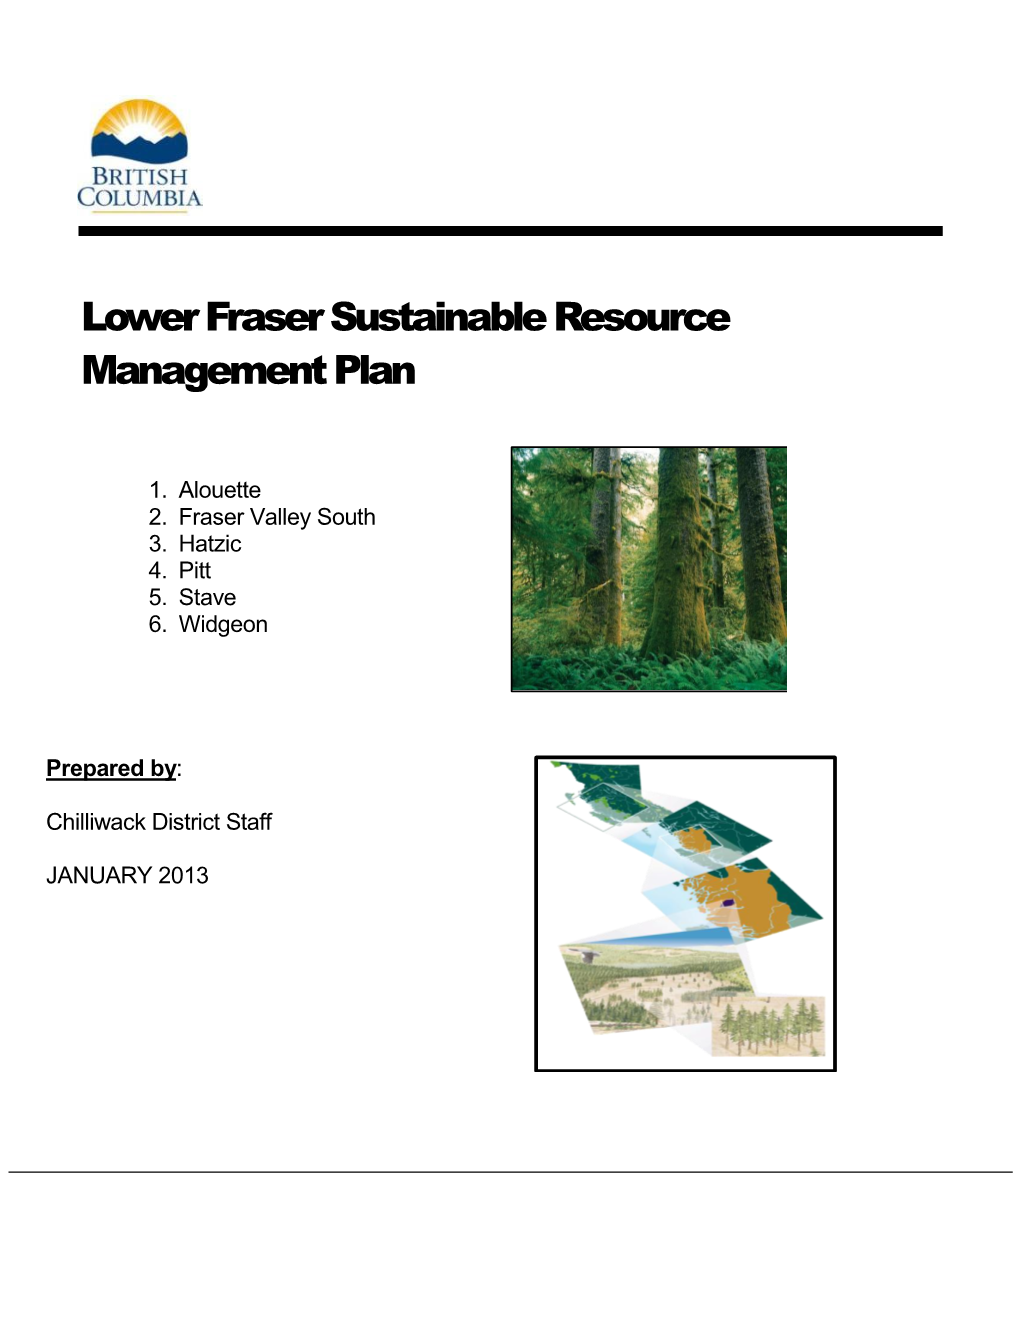 Lower Fraser Sustainable Resource Management Plan